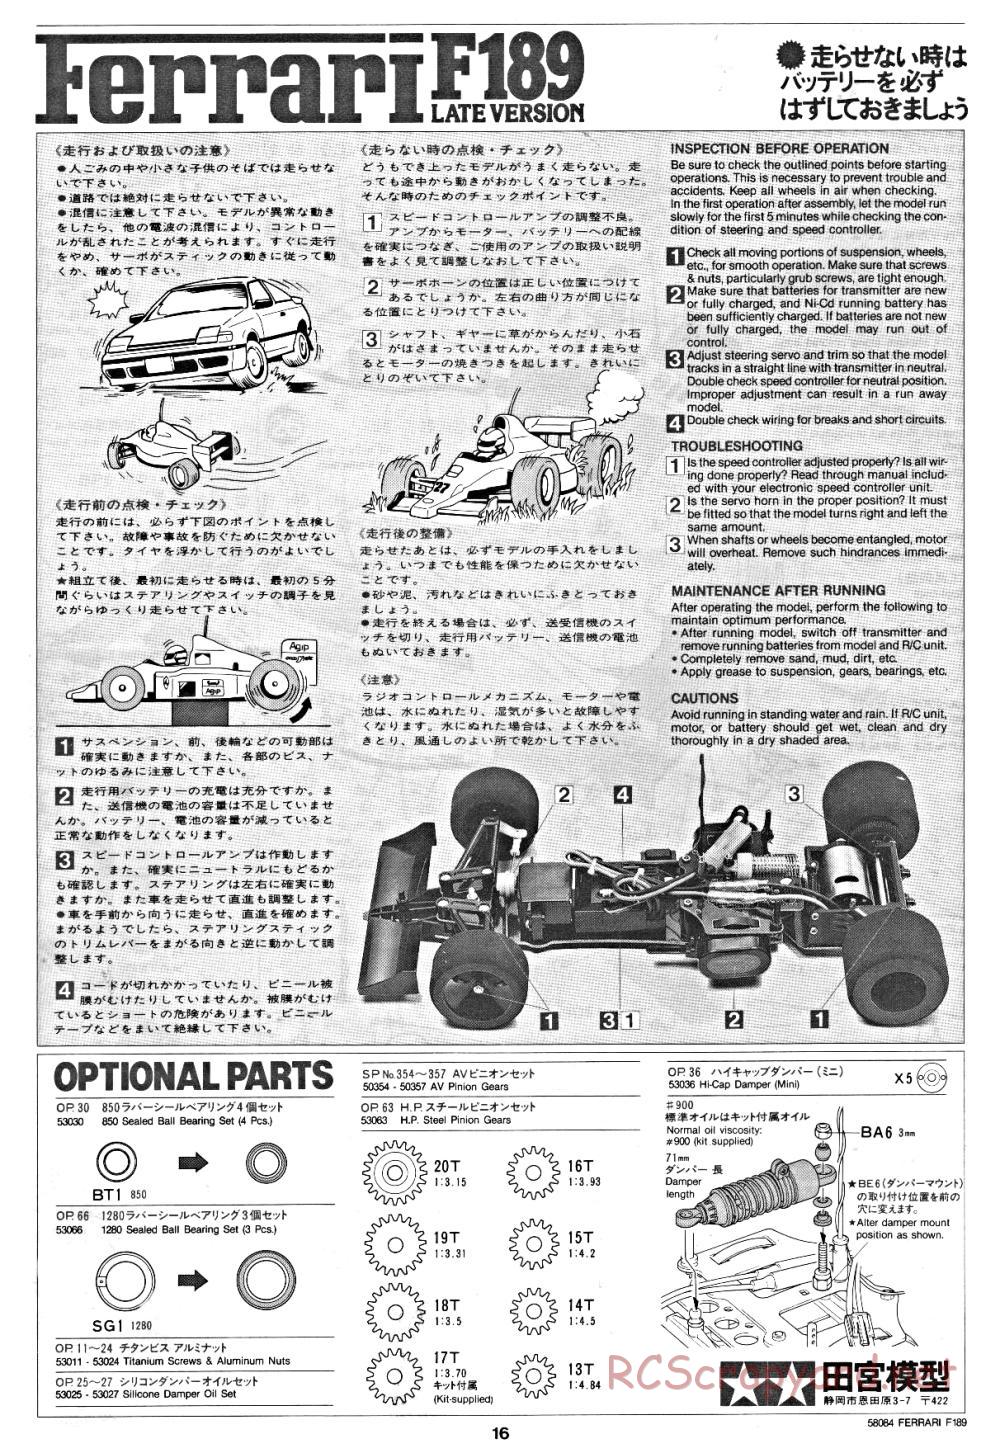 Tamiya - Ferrari F189 Late Version - 58084 - Manual - Page 16